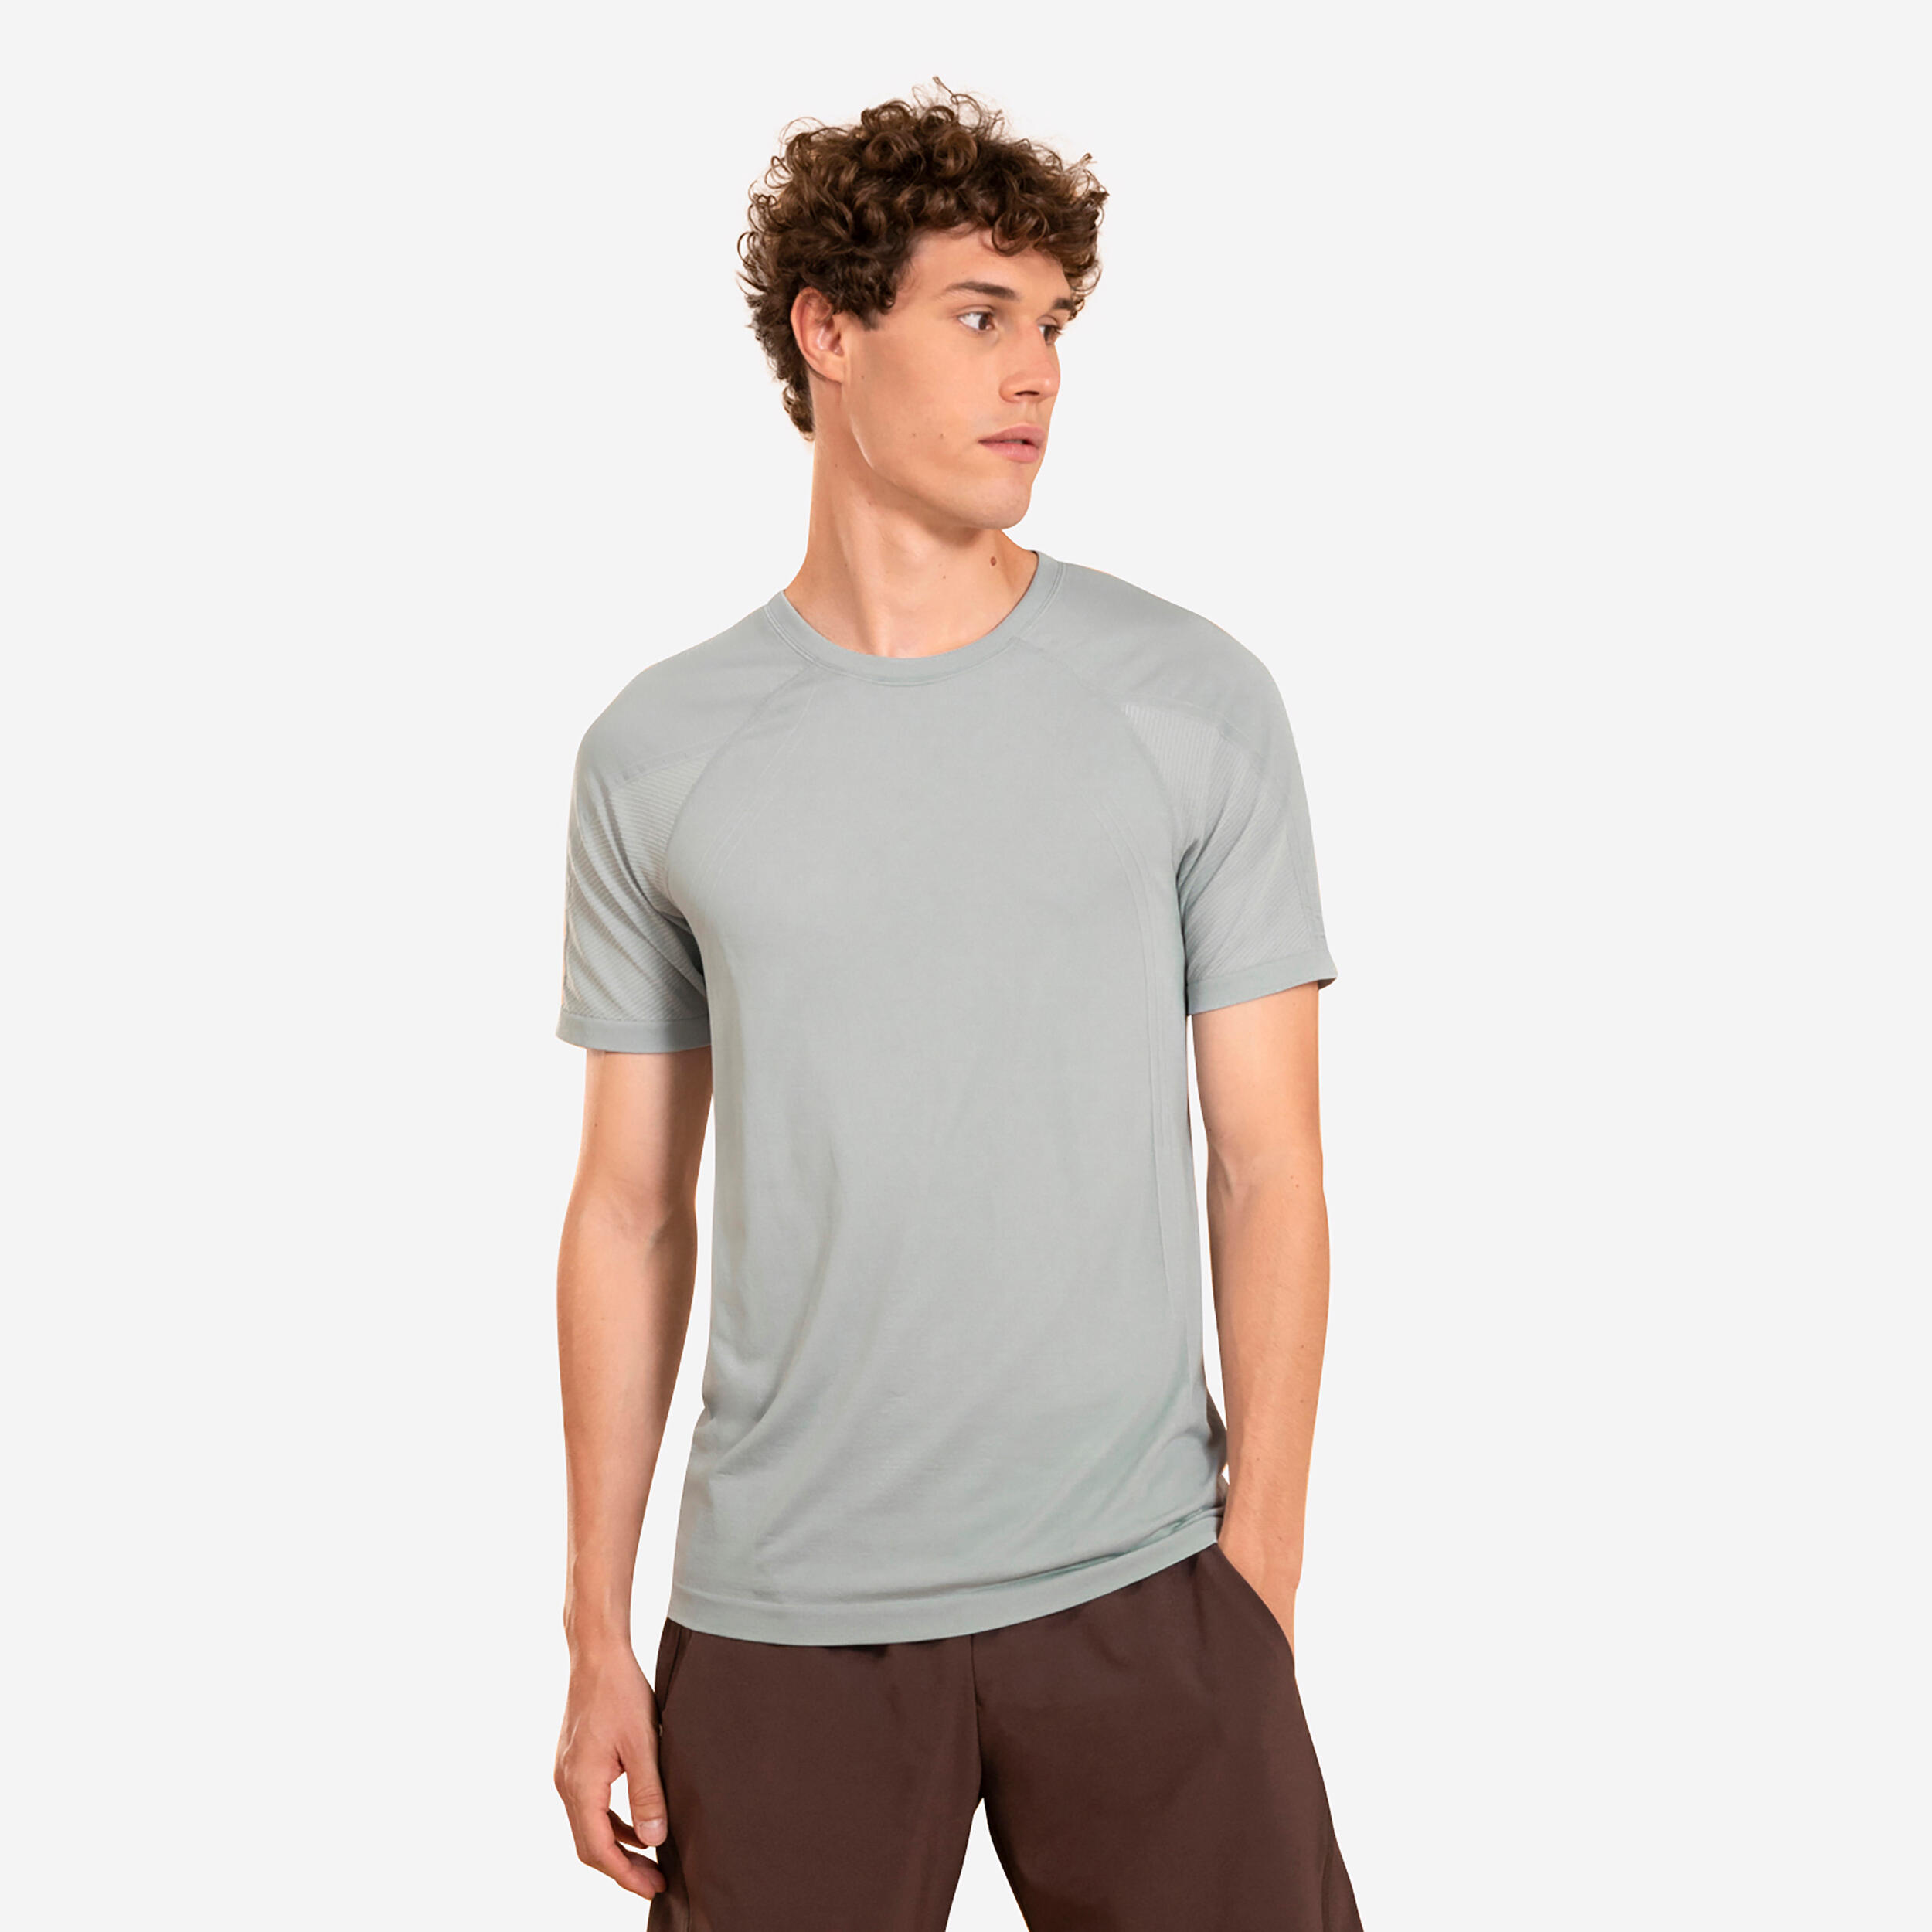 Men's Seamless Yoga T-Shirt Second Skin - Light Grey 1/4